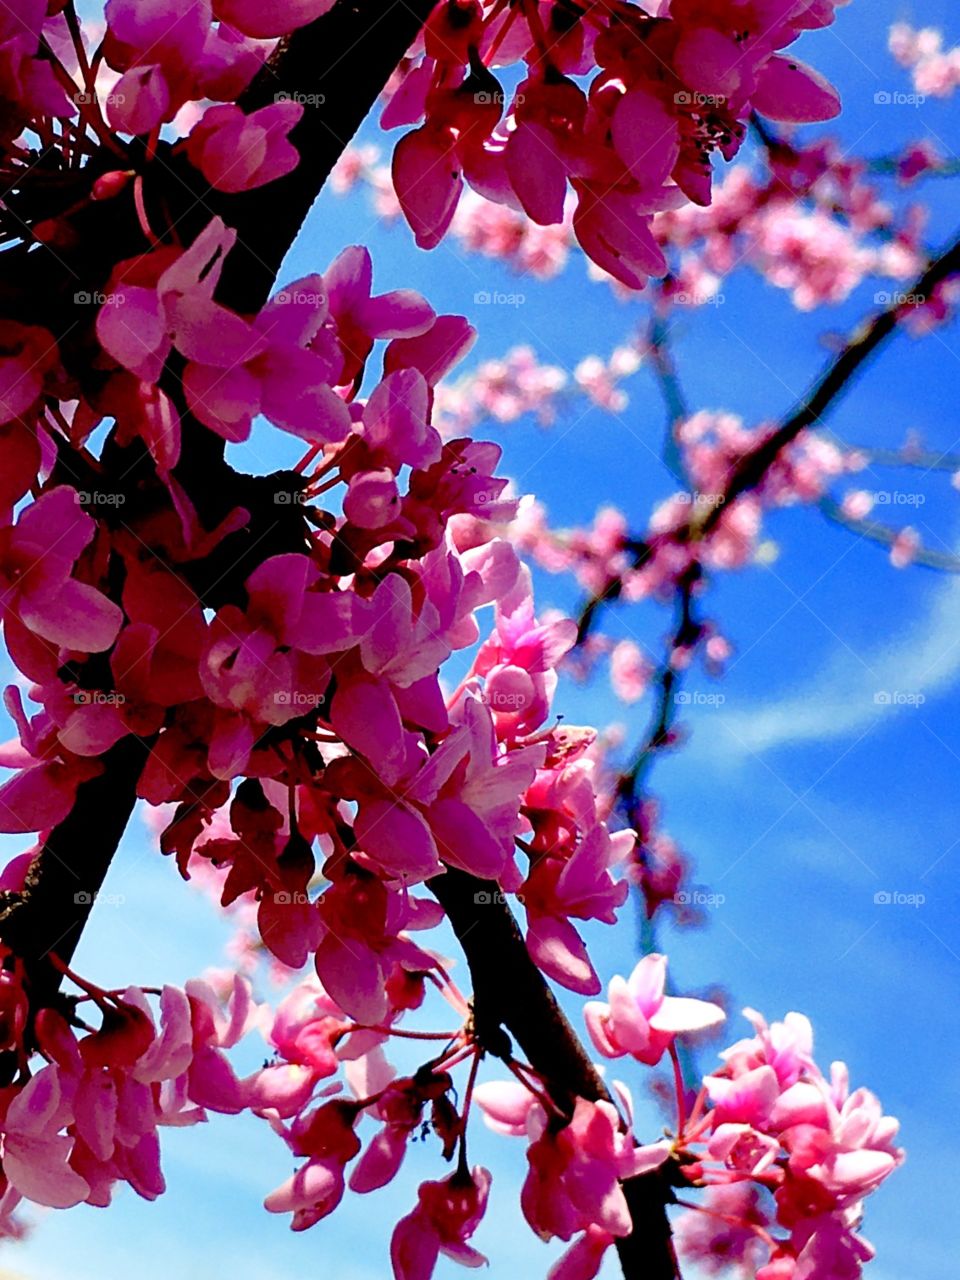 Blue skies and pink flowers of spring